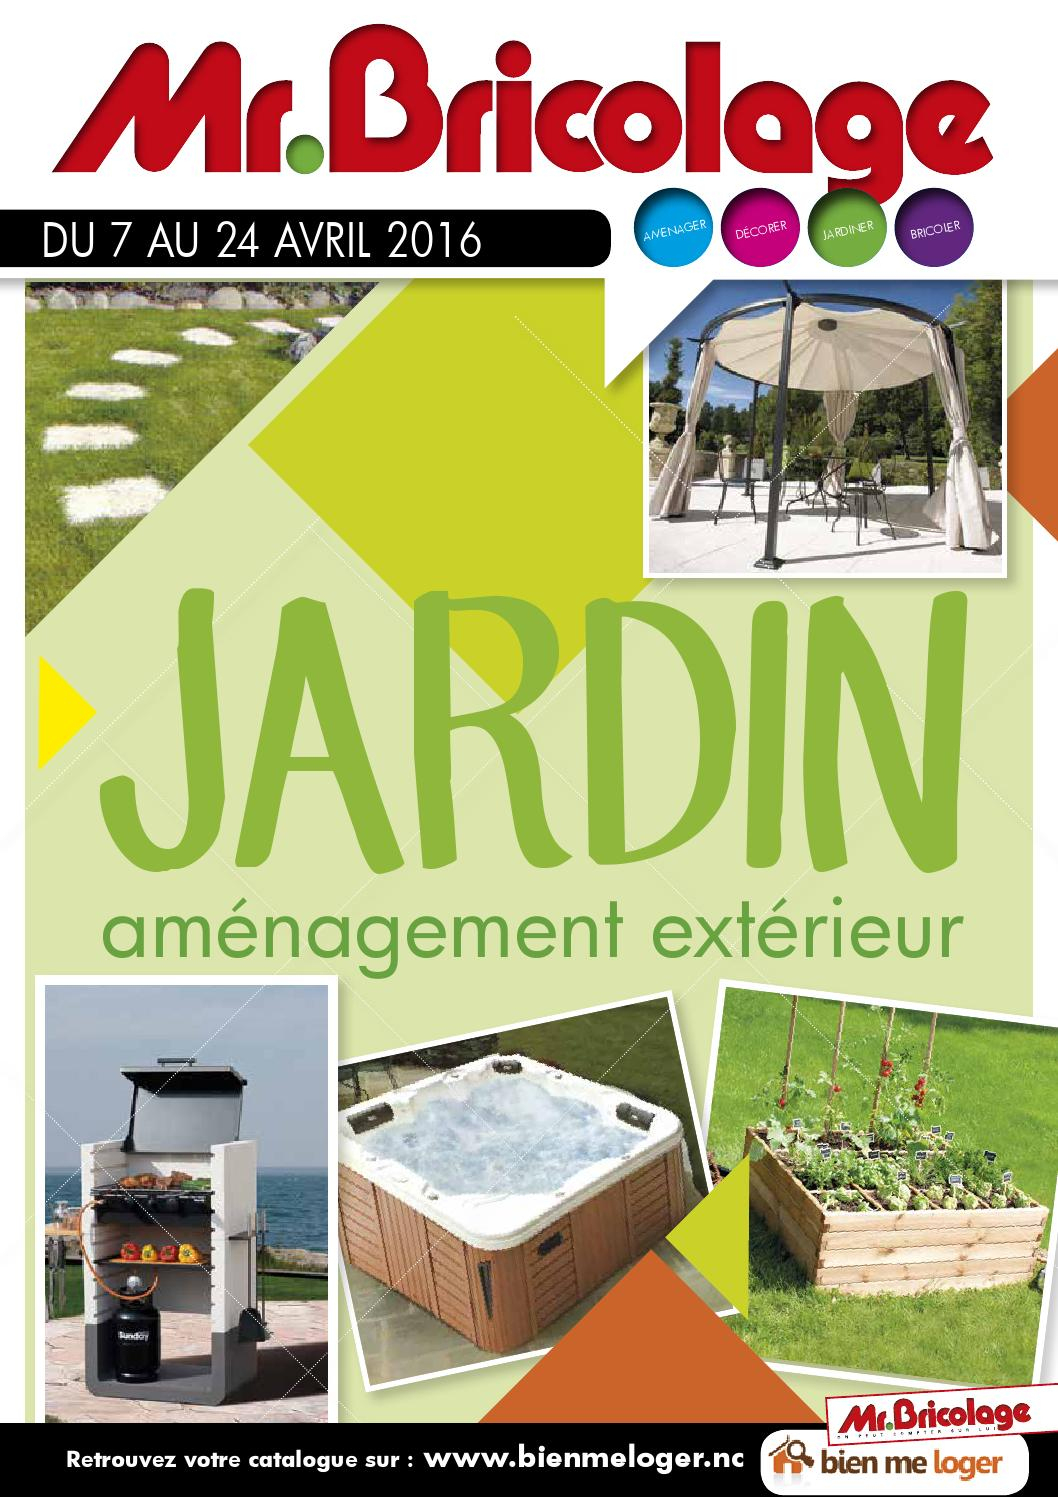 Catalogue Mr Bricolage: Jardin By Skazy - Issuu intérieur Tonnelle De Jardin Mr Bricolage